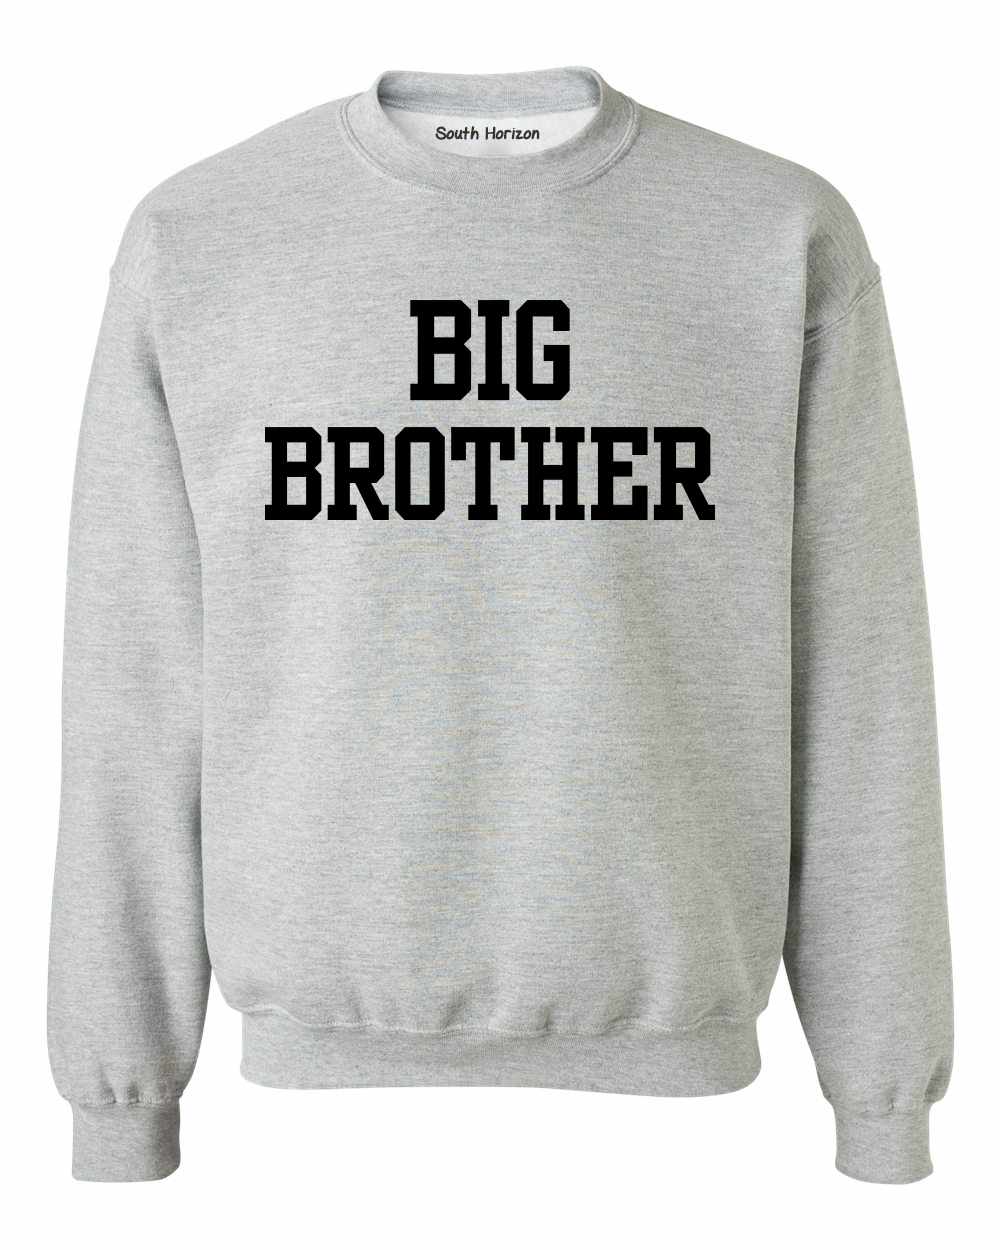 BIG BROTHER Sweat Shirt